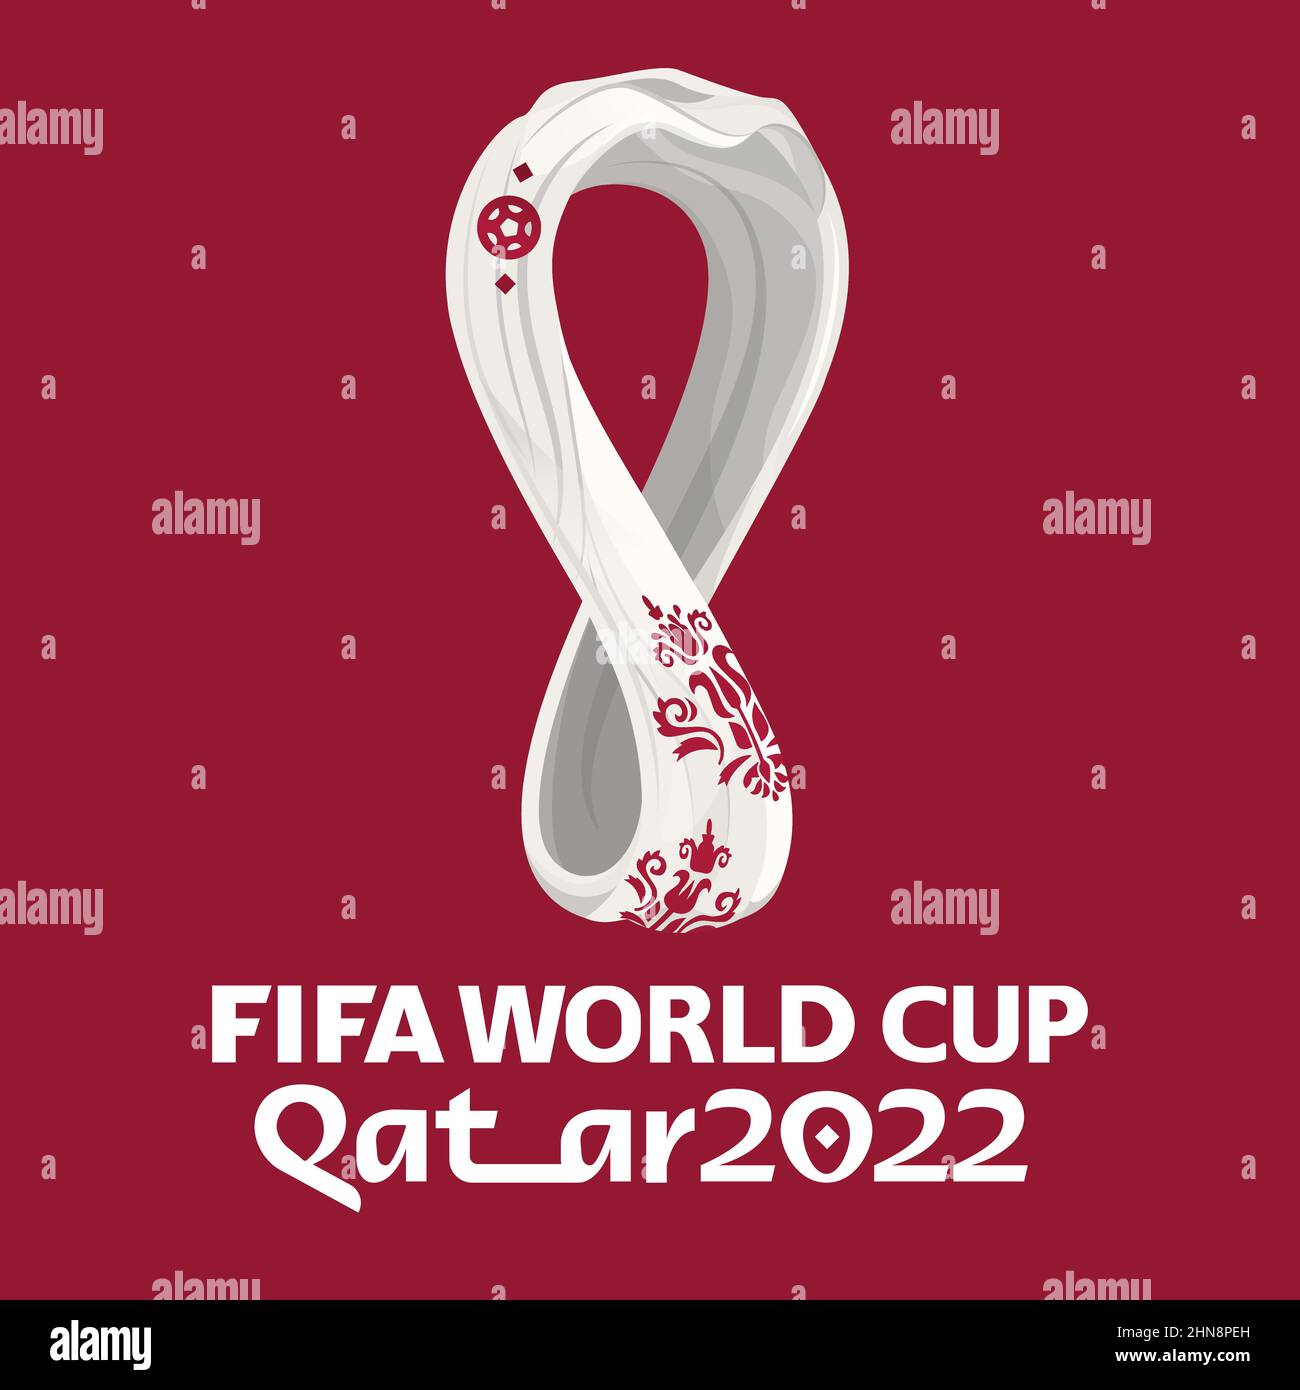 Vinnytsia, Ukraine - February 14, 2022: 2022 FIFA world cup logo